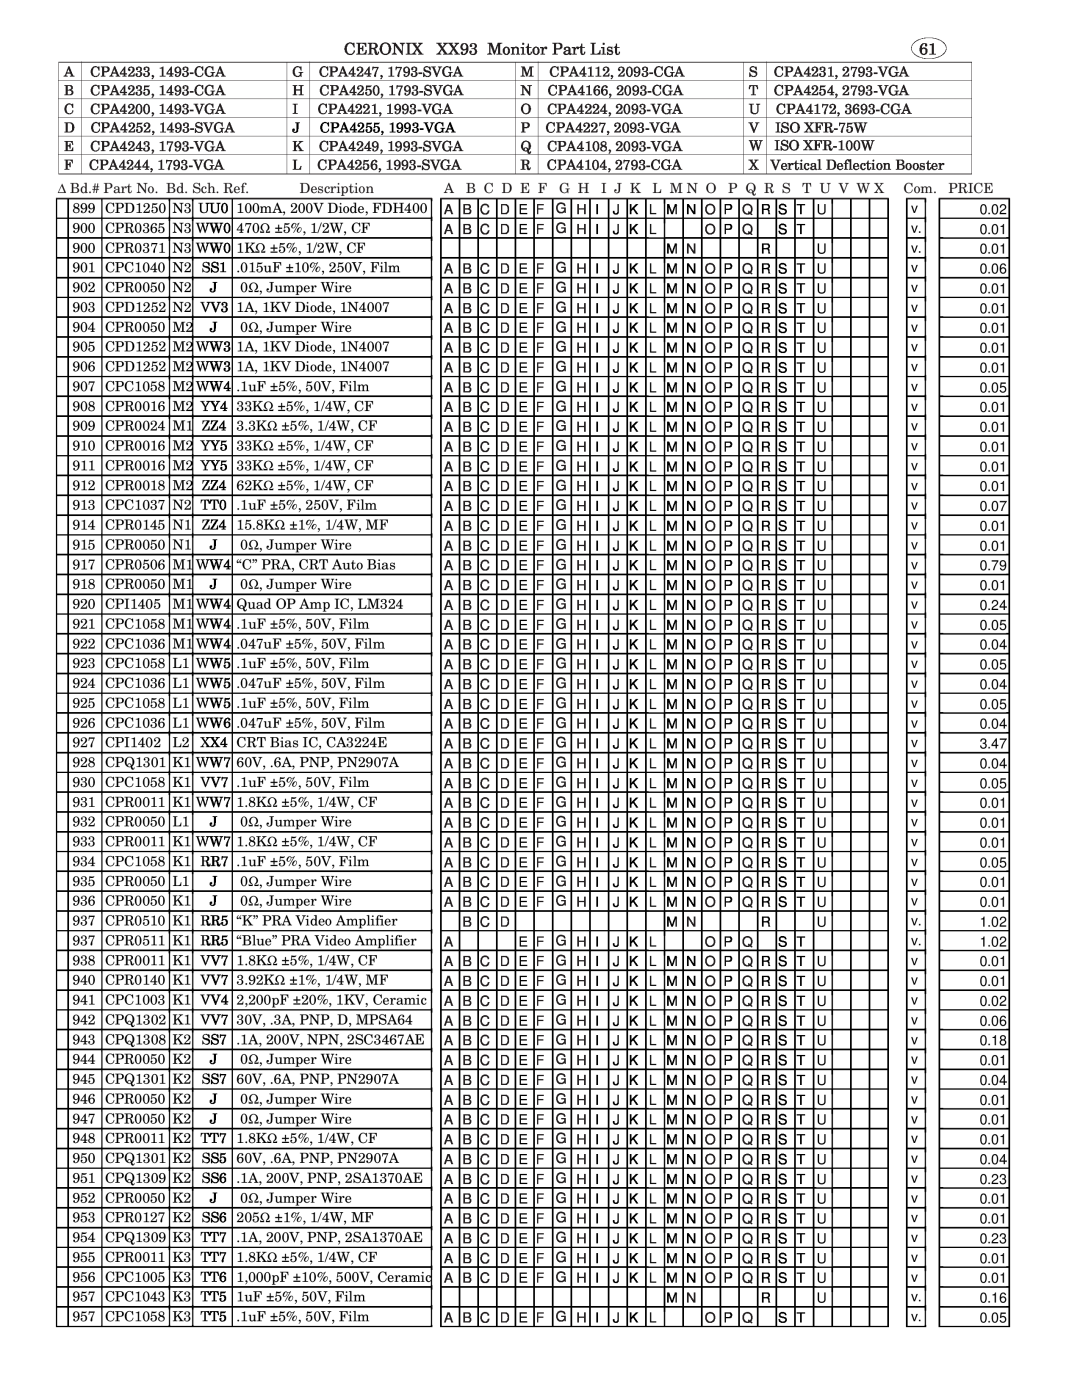 Genius 1793, ISO XFR-75W, 2093, 1493, 2793, 3693, 1993, ISO XFR-100W manual CERONIX XX93 Monitor Part List 